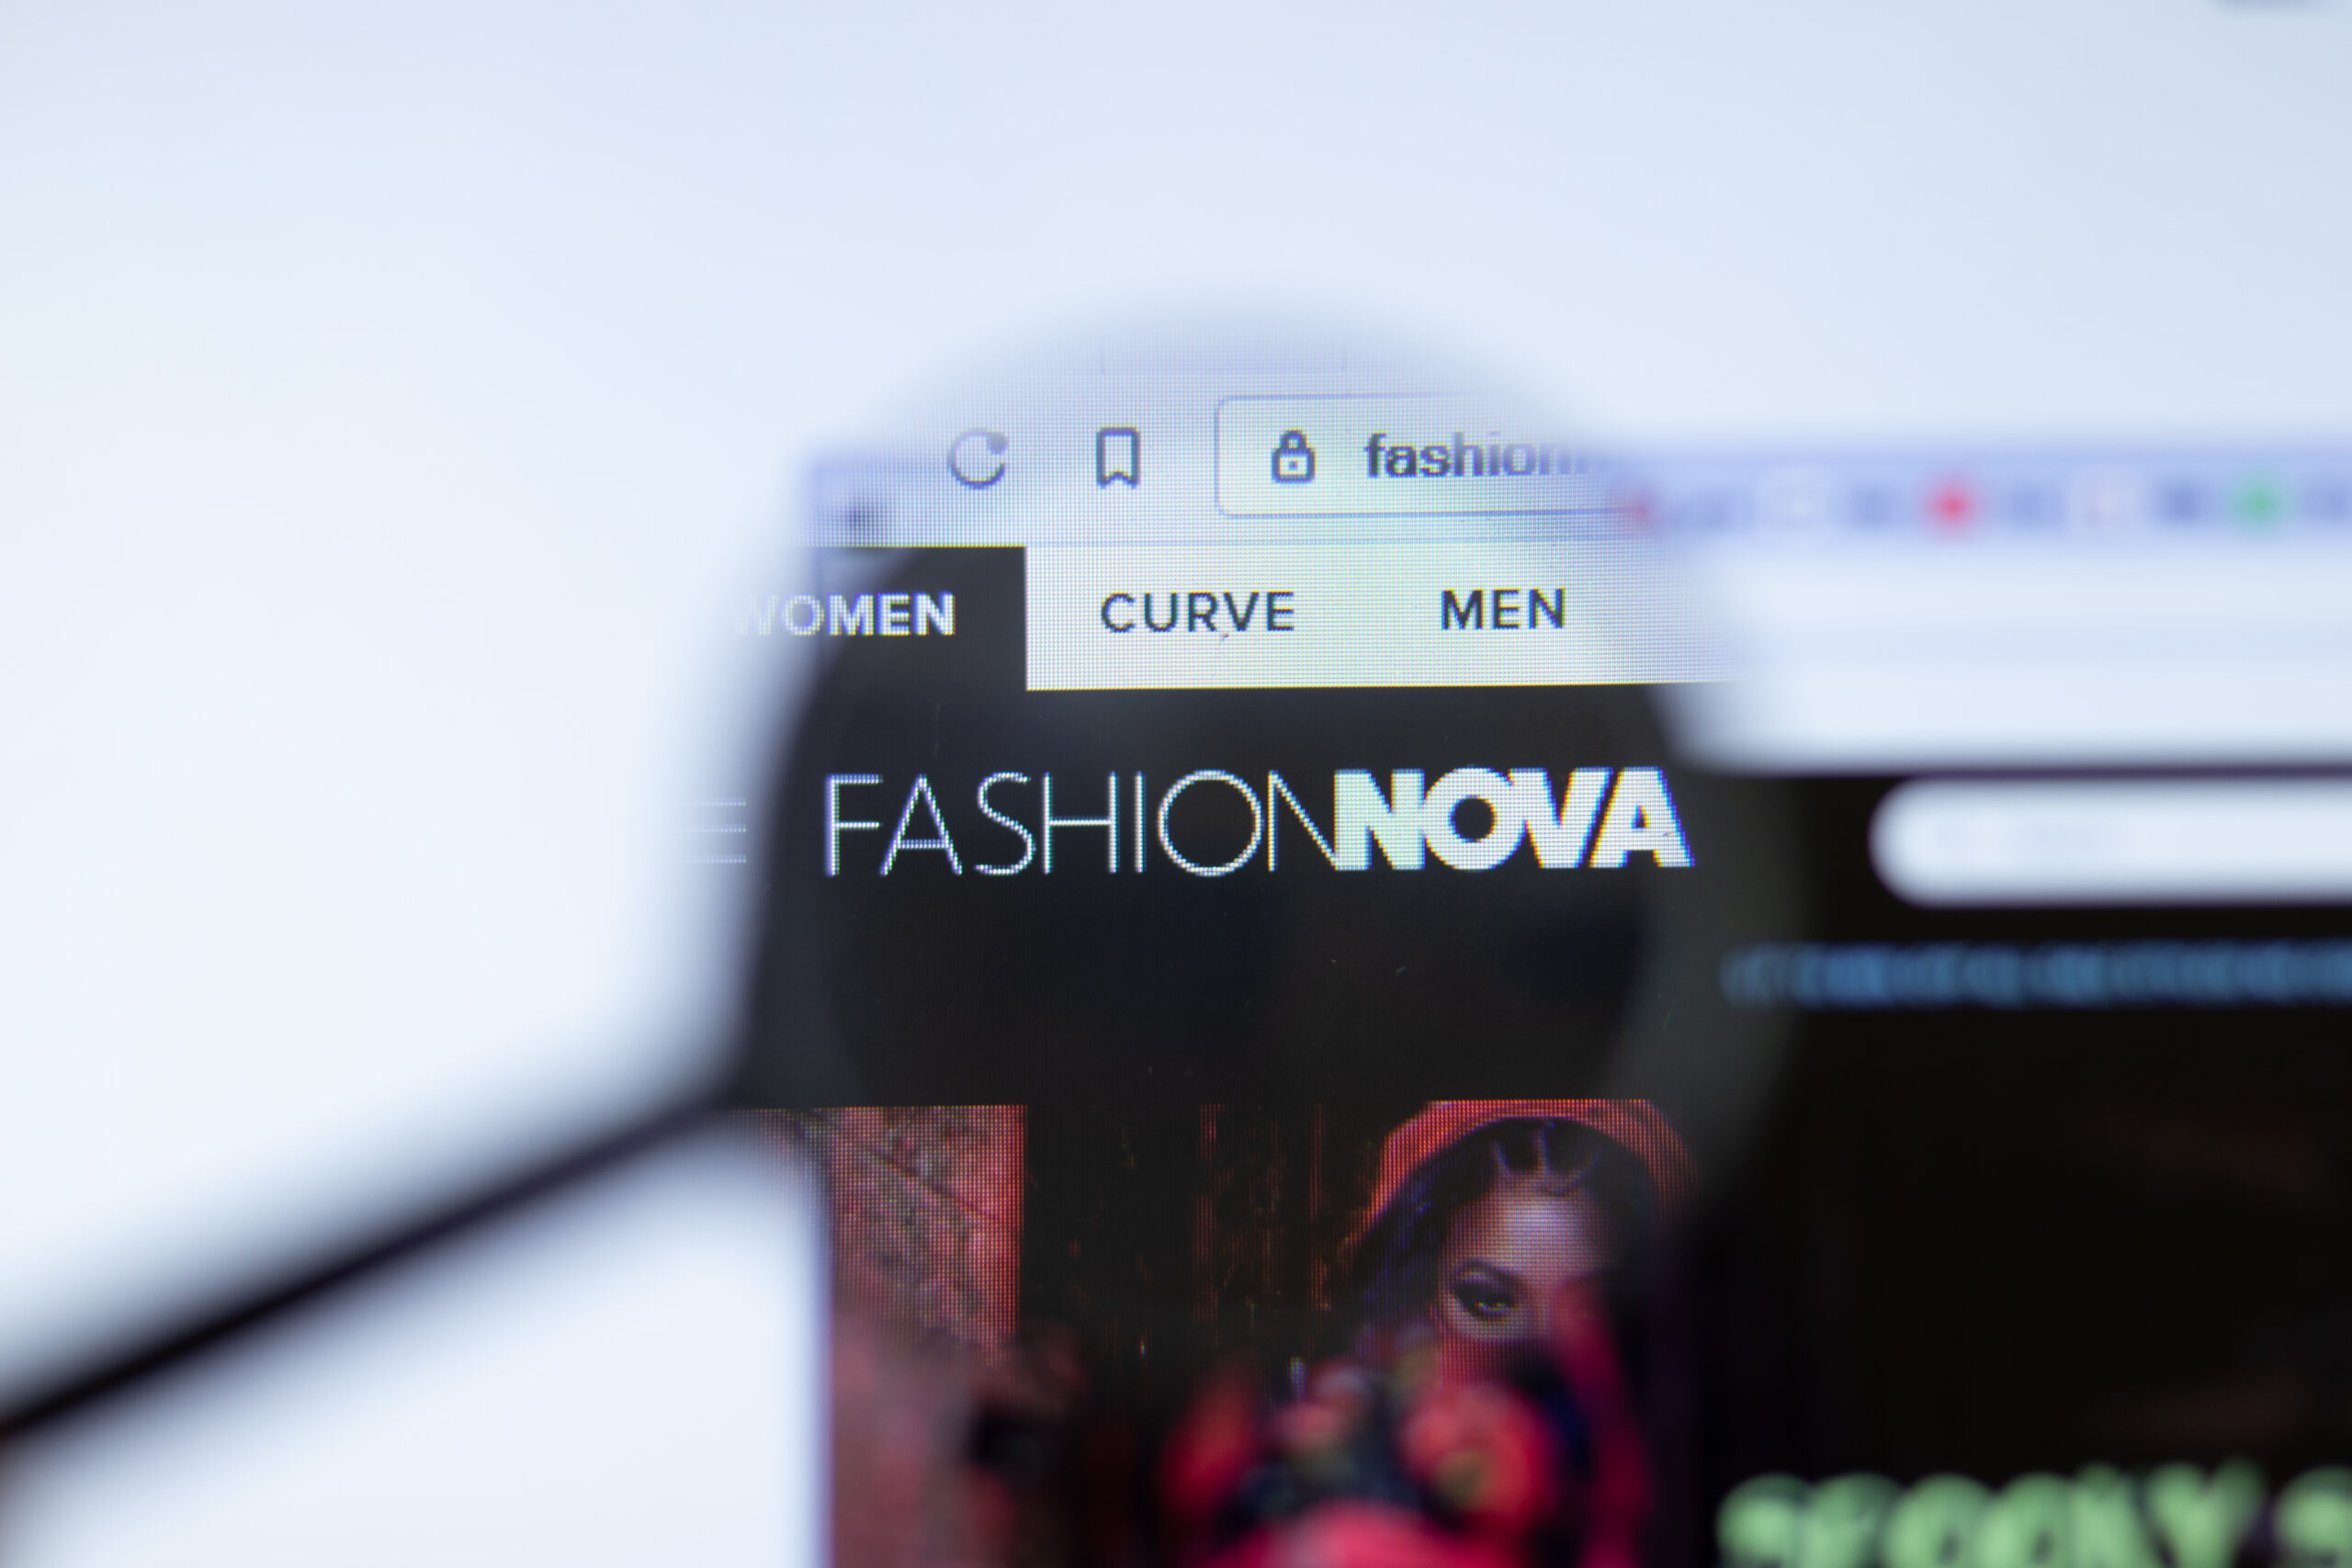 why is fashion nova so popular